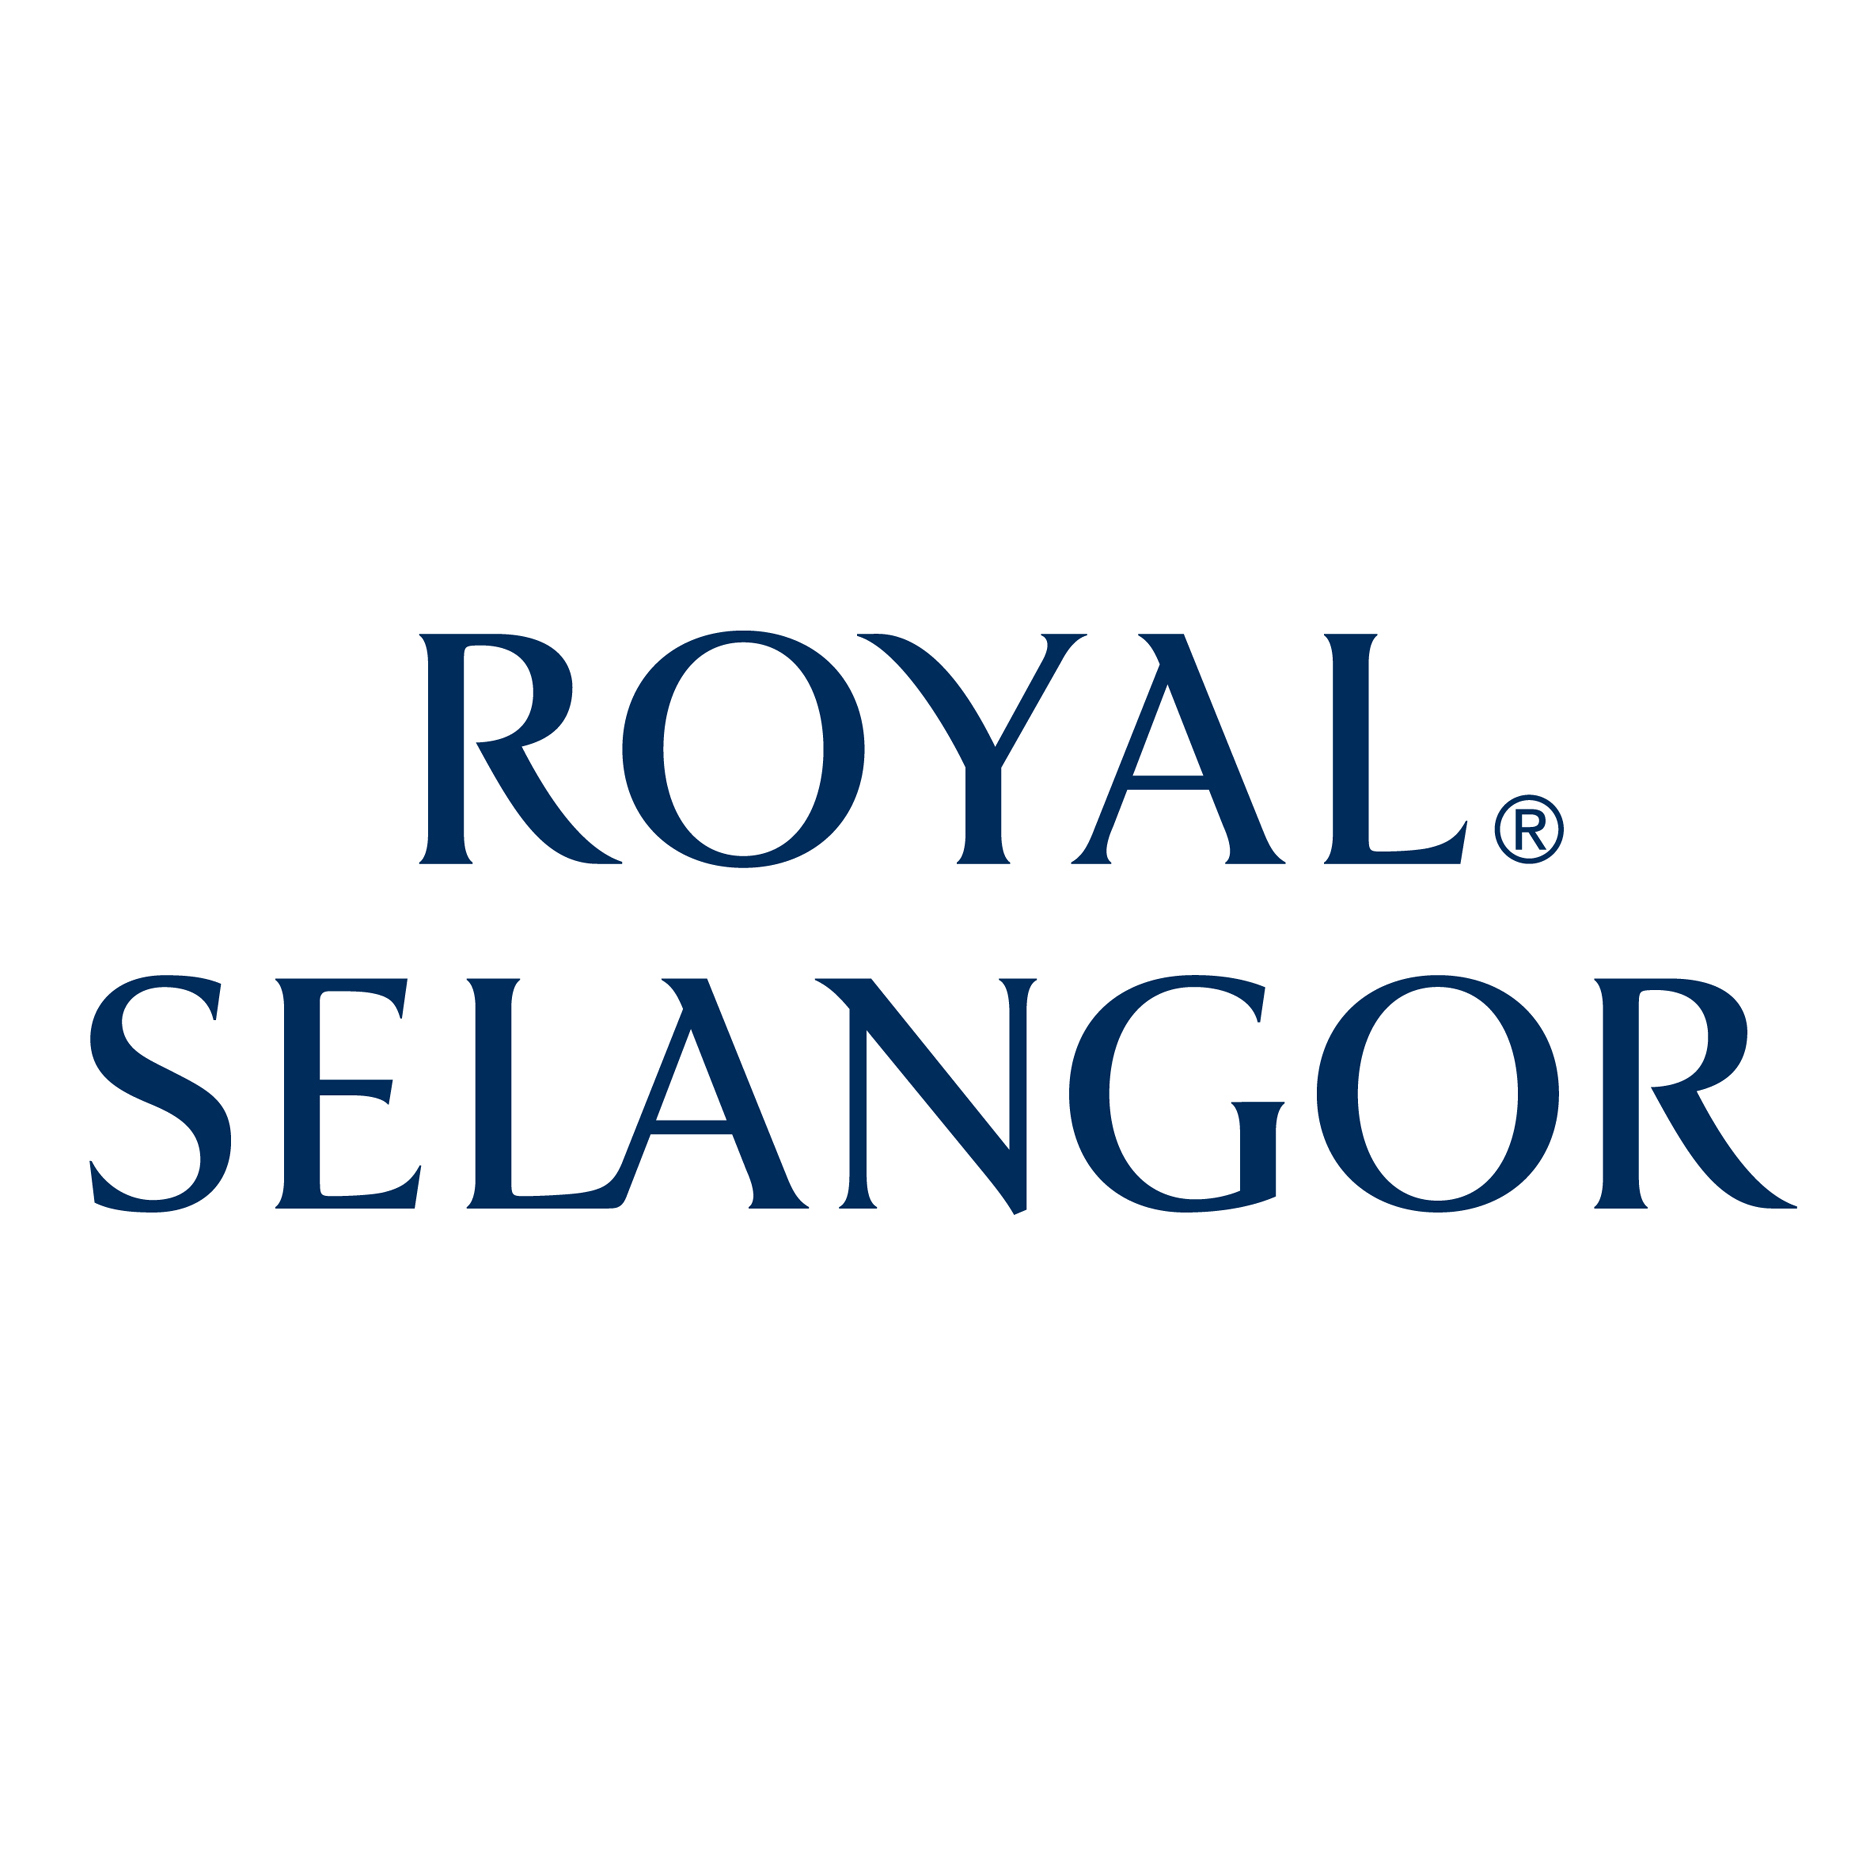 Royal Selangor Logo.jpg